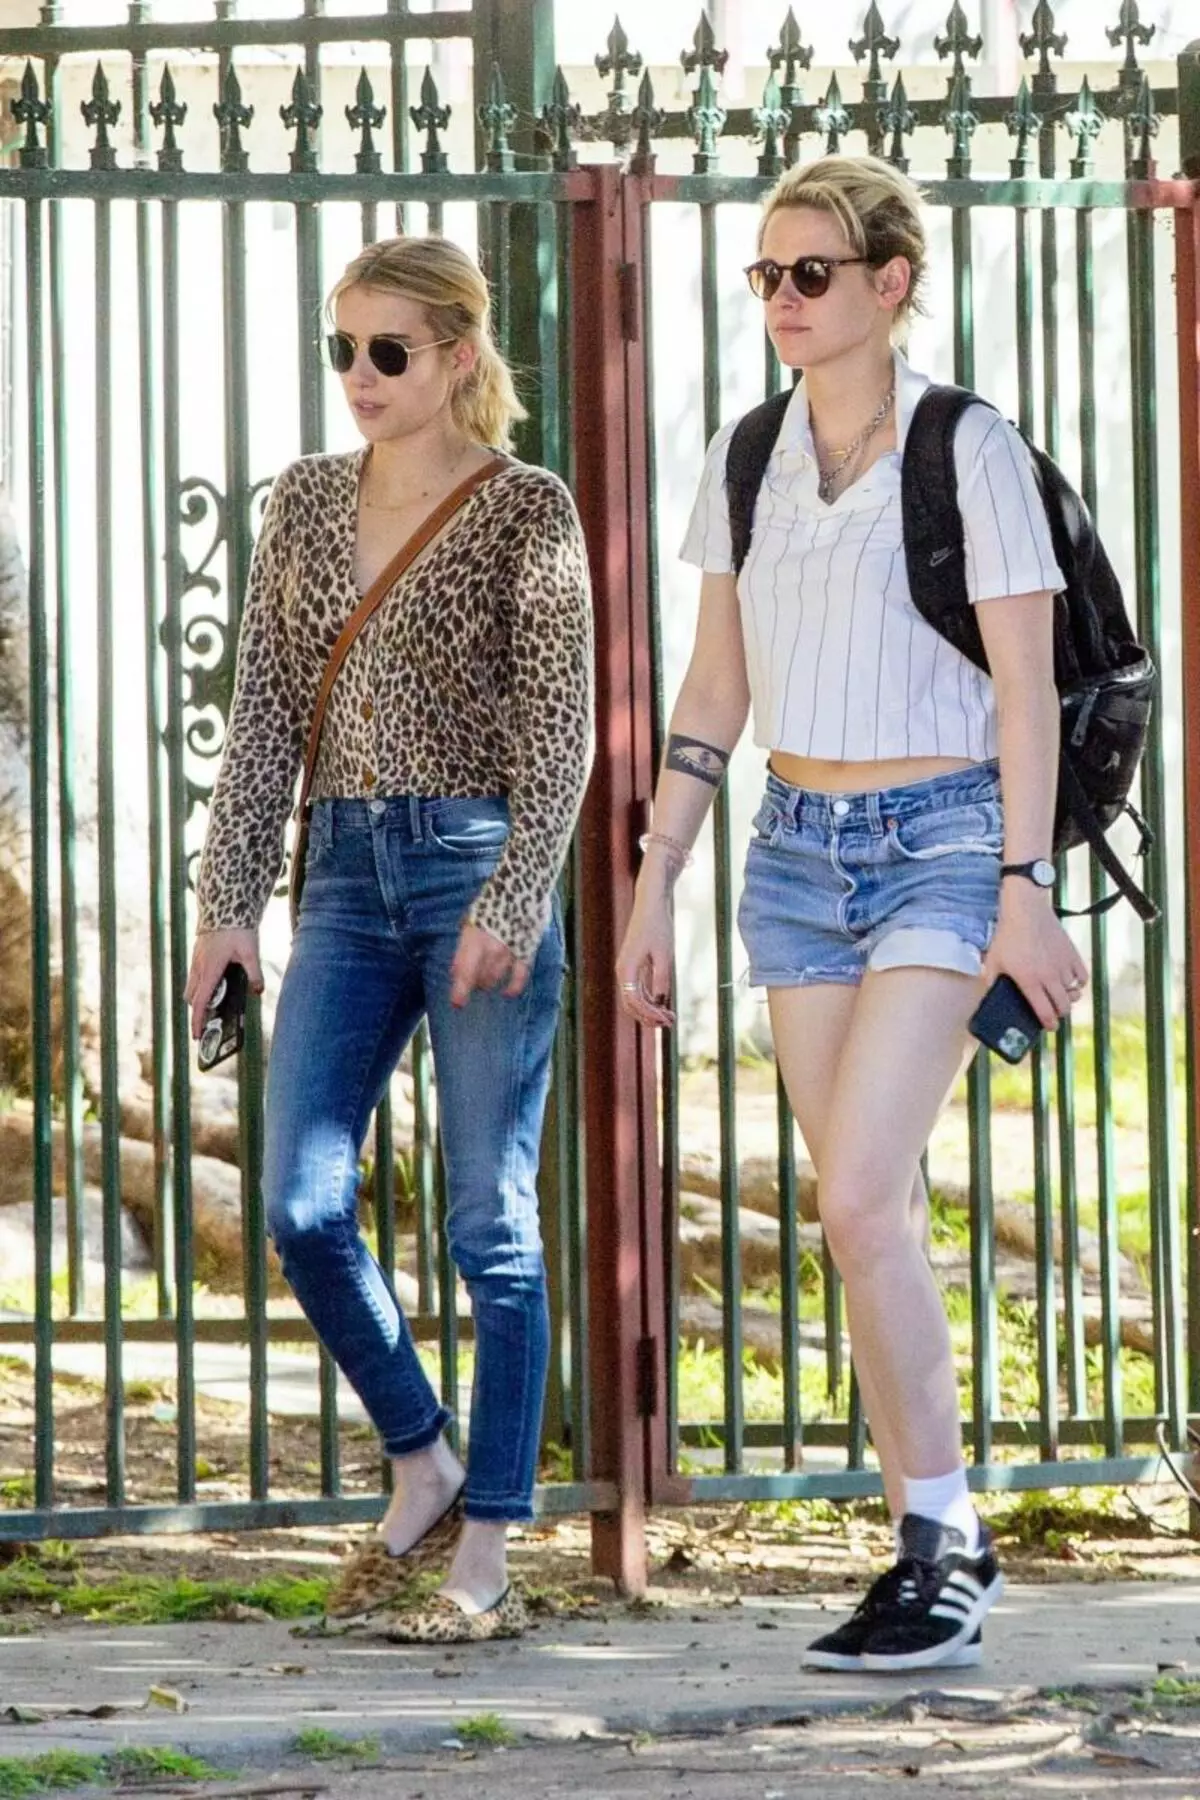 FOTO: Kristen Stewart u šetnji s prijateljicom Emma Roberts 55712_3